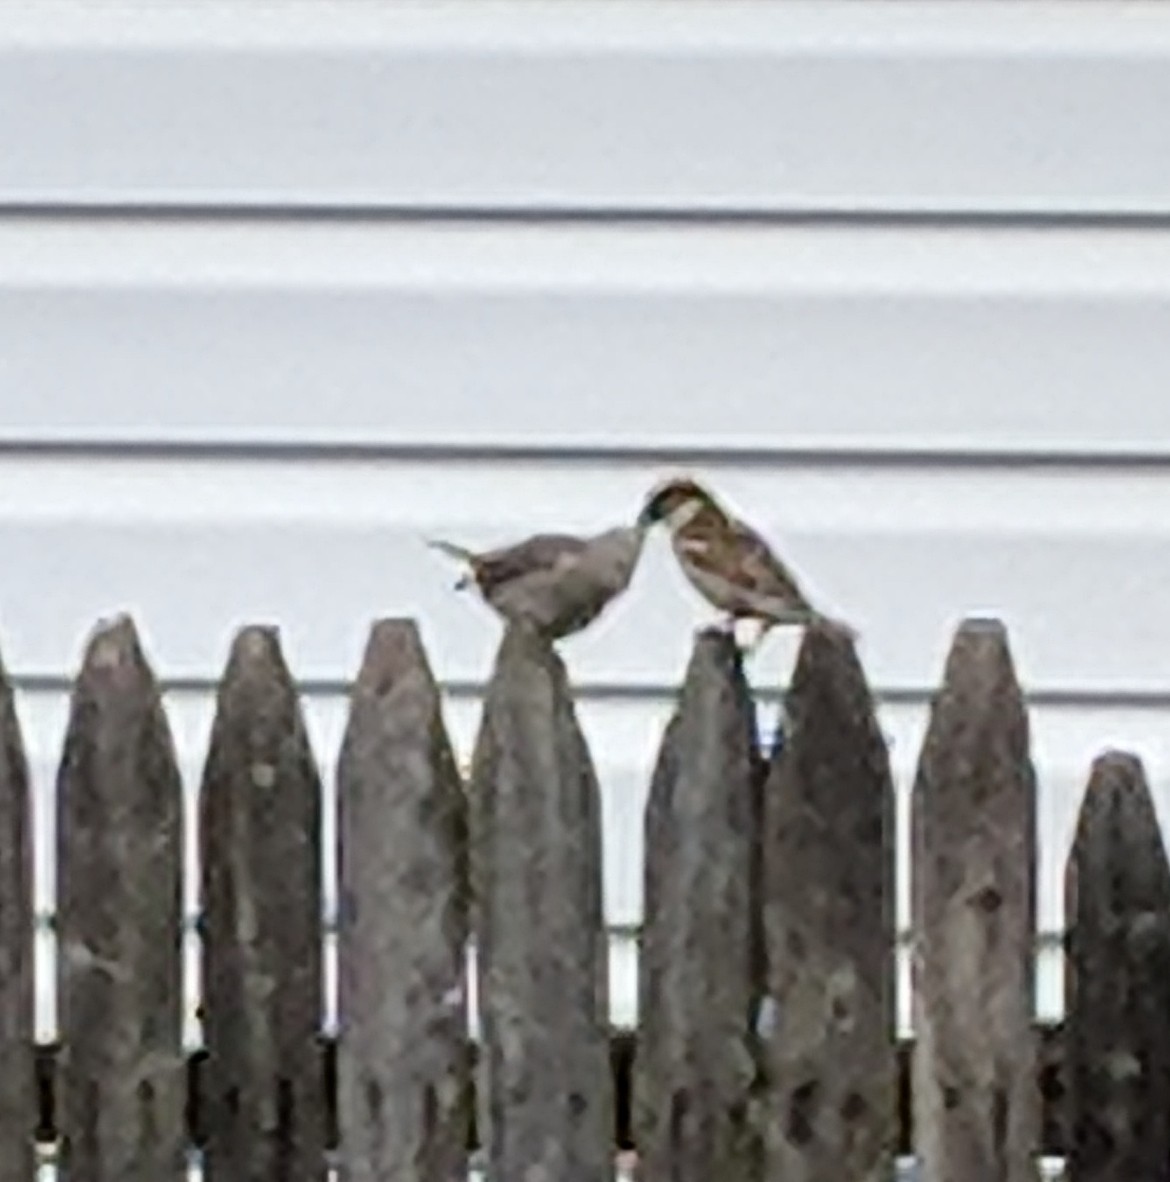 House Sparrow - Frank BirdmanNY